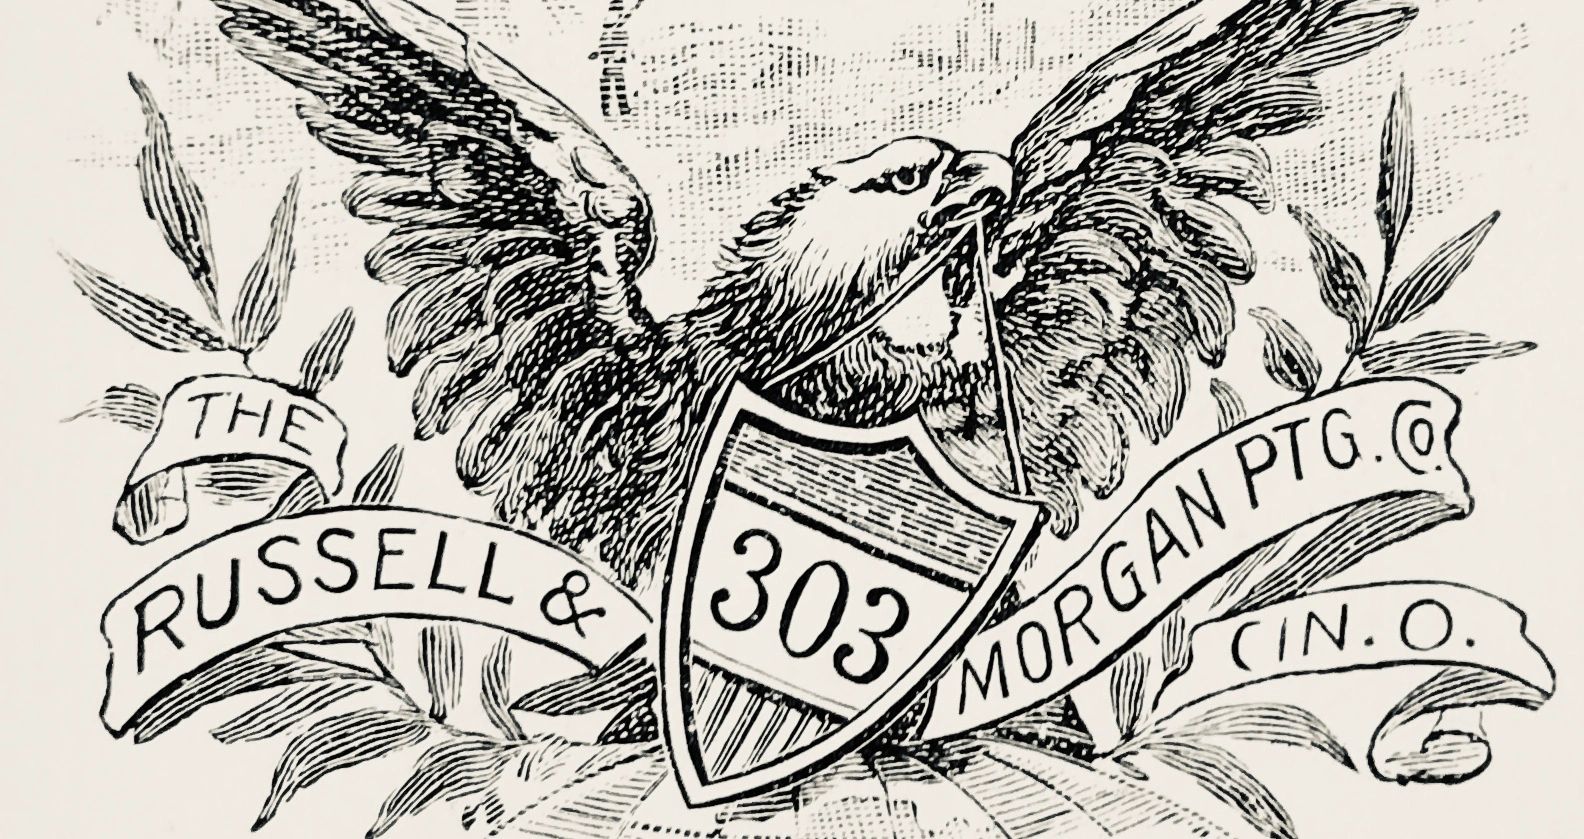 Russell & Morgan - Army & Navy - Ace of Spades - circa 1885